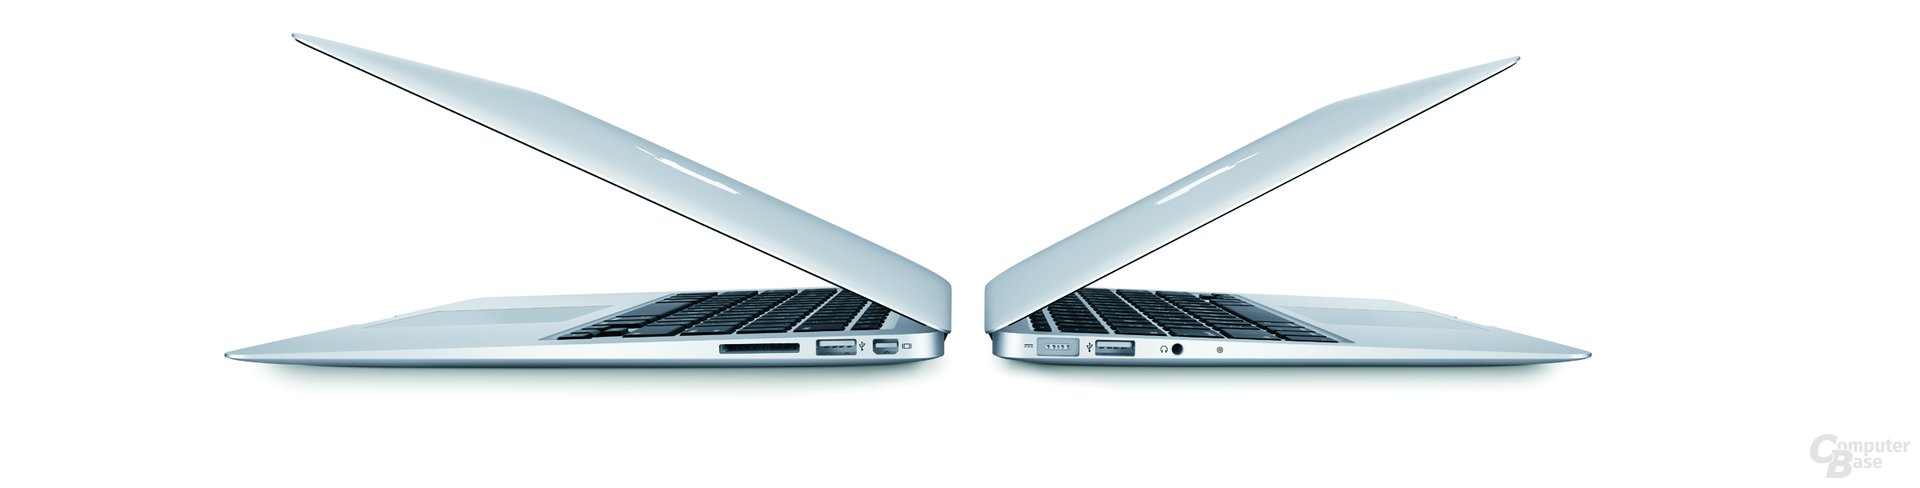 MacBook-Air-Familie